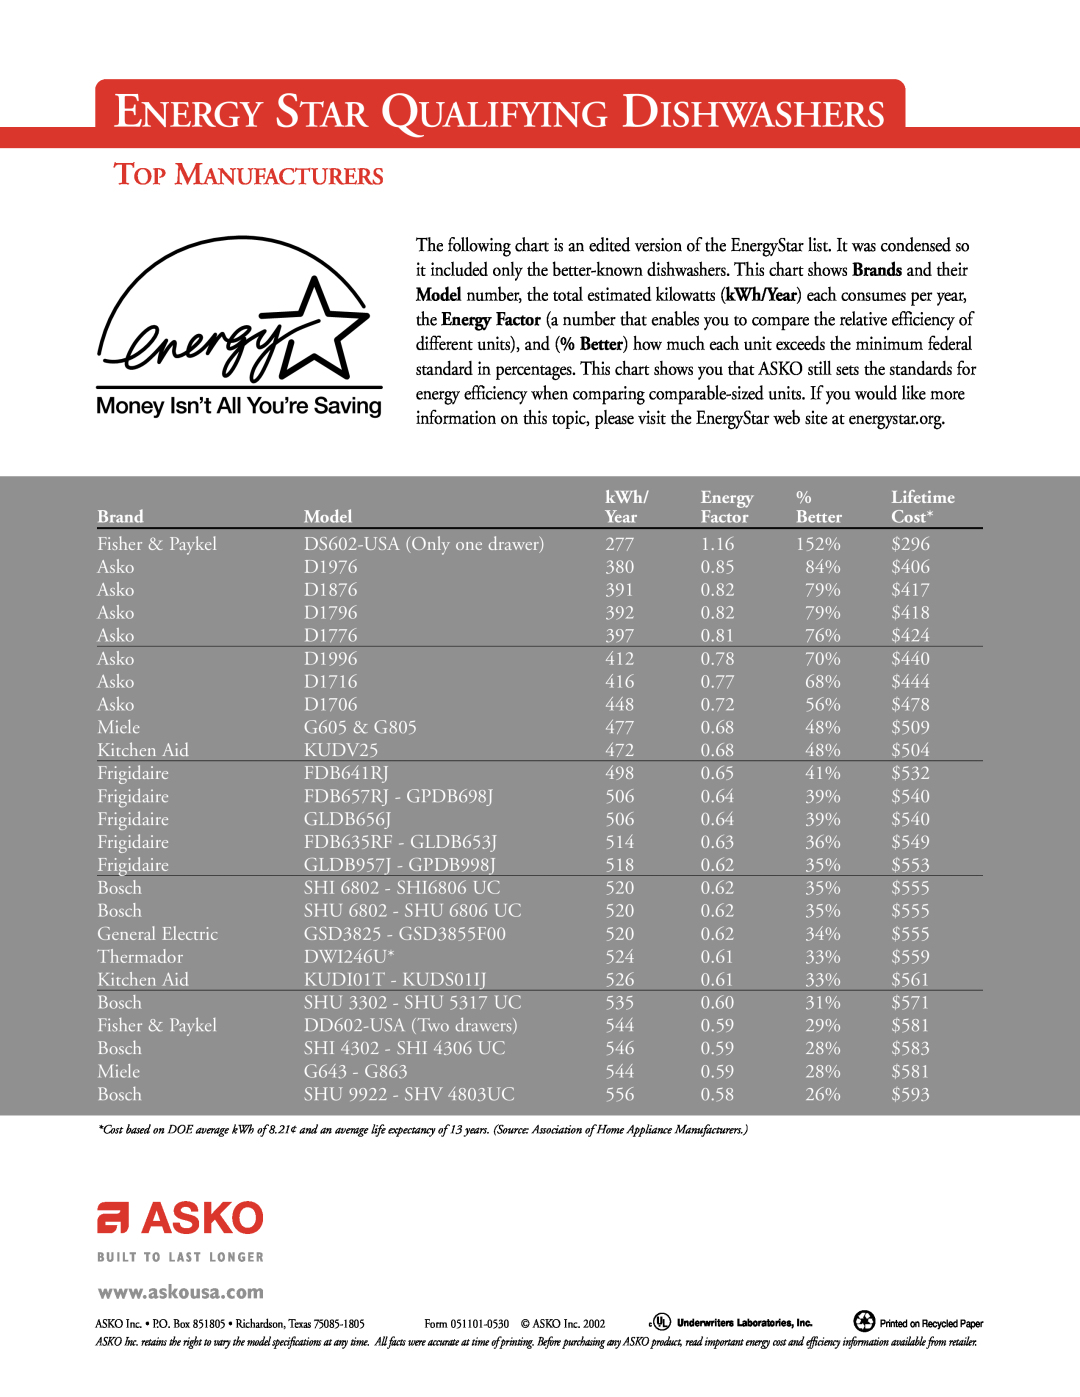 Fisher & Paykel 2002 VRS 2.0 manual Energy Star Qualifying Dishwashers, Top Manufacturers 